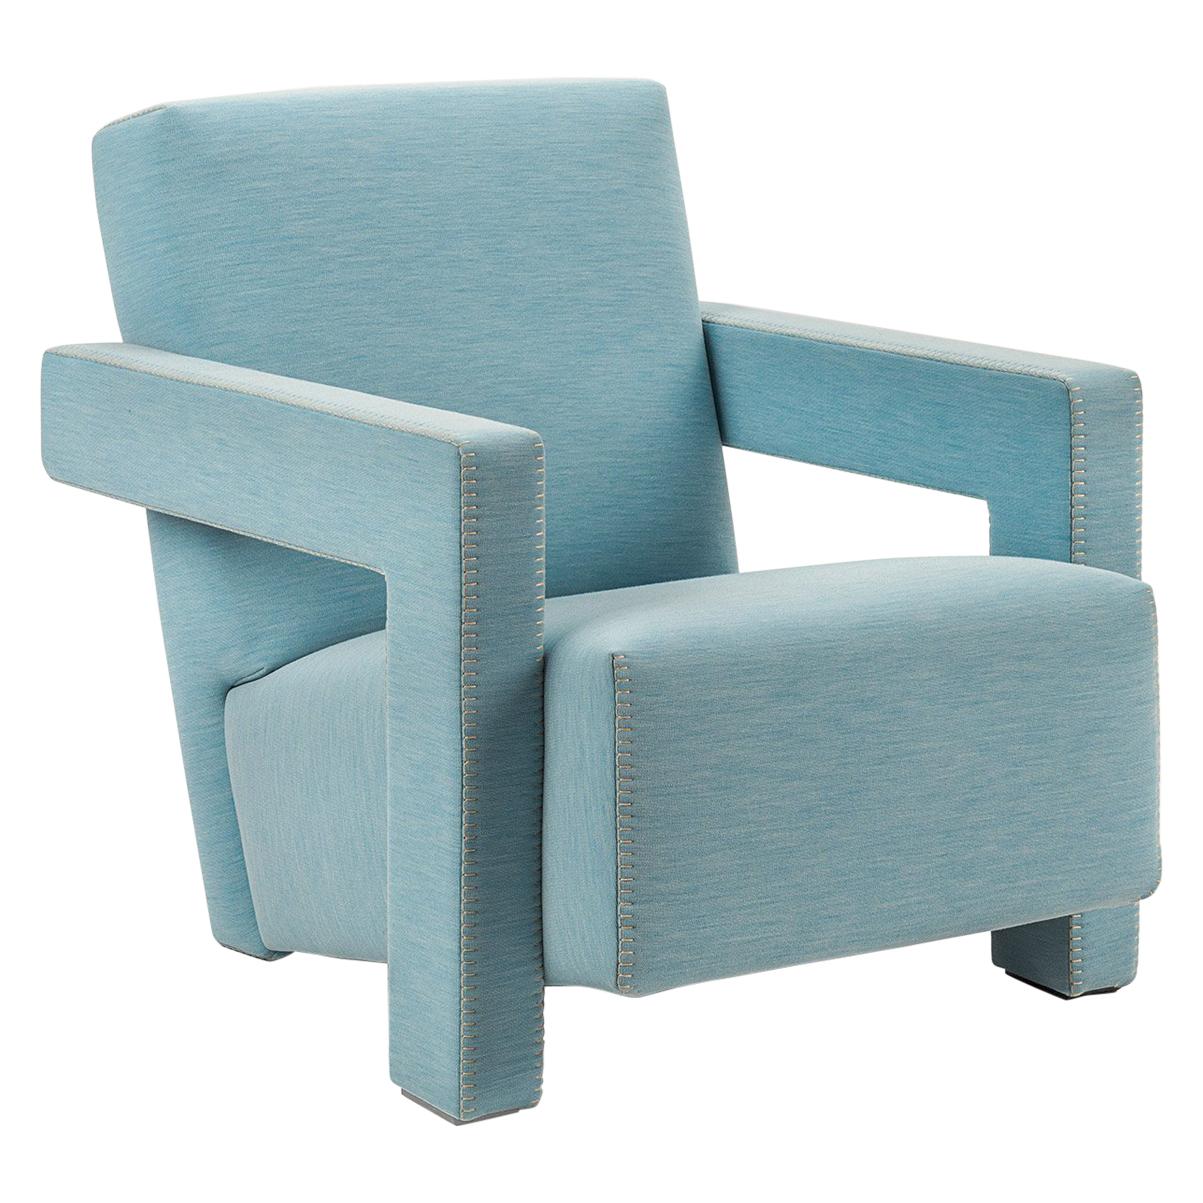 Utrecht XL Lounge Chair designed by Gerrit Rietveld in 1935